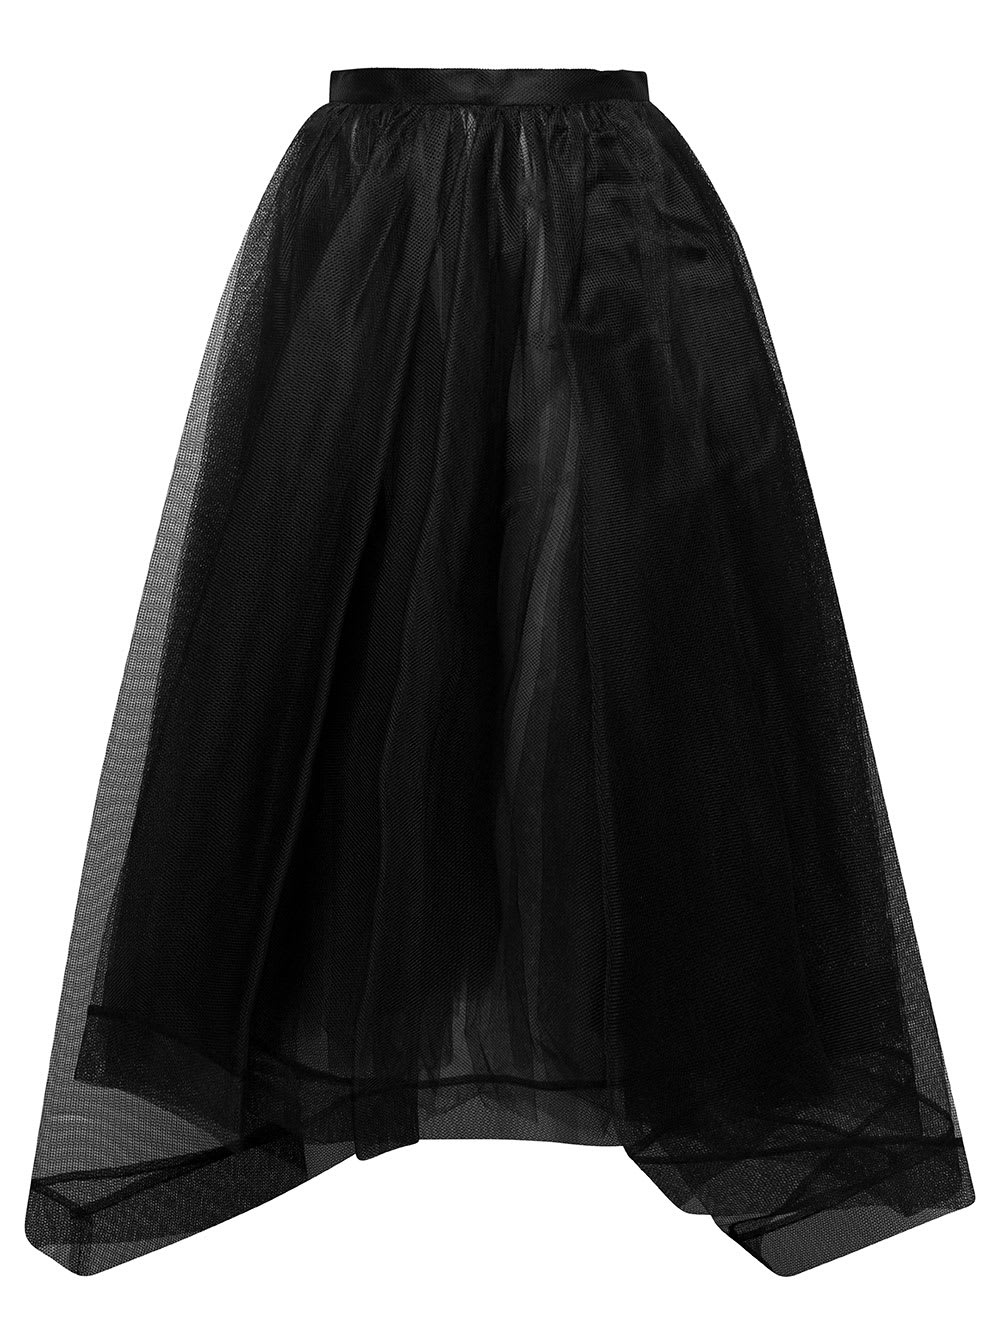 Midi Black Round Skirt In Paris Net Woman